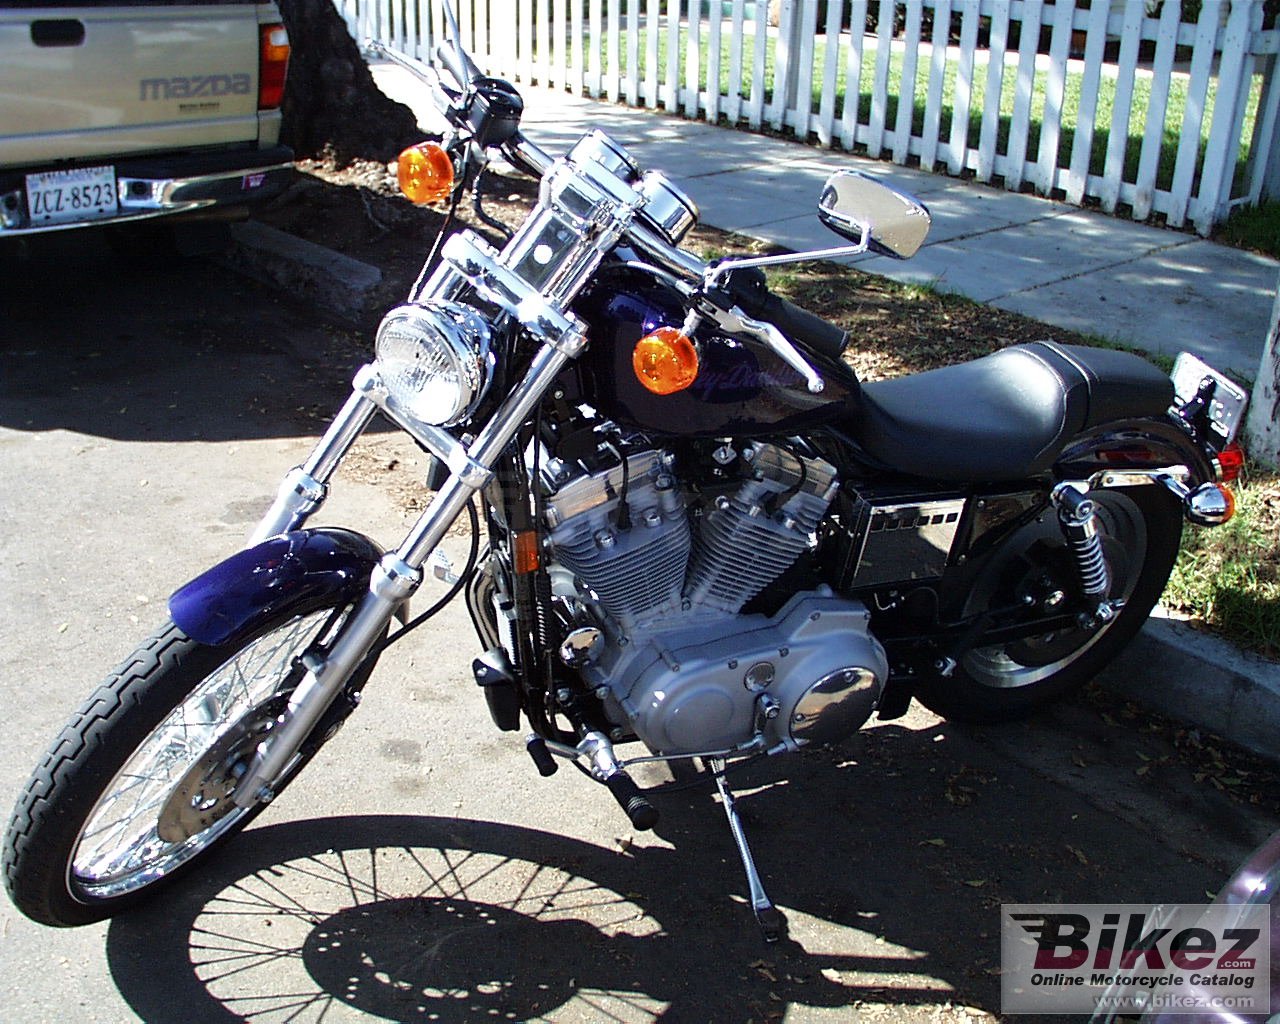 Harley-Davidson XLH Sportster 883